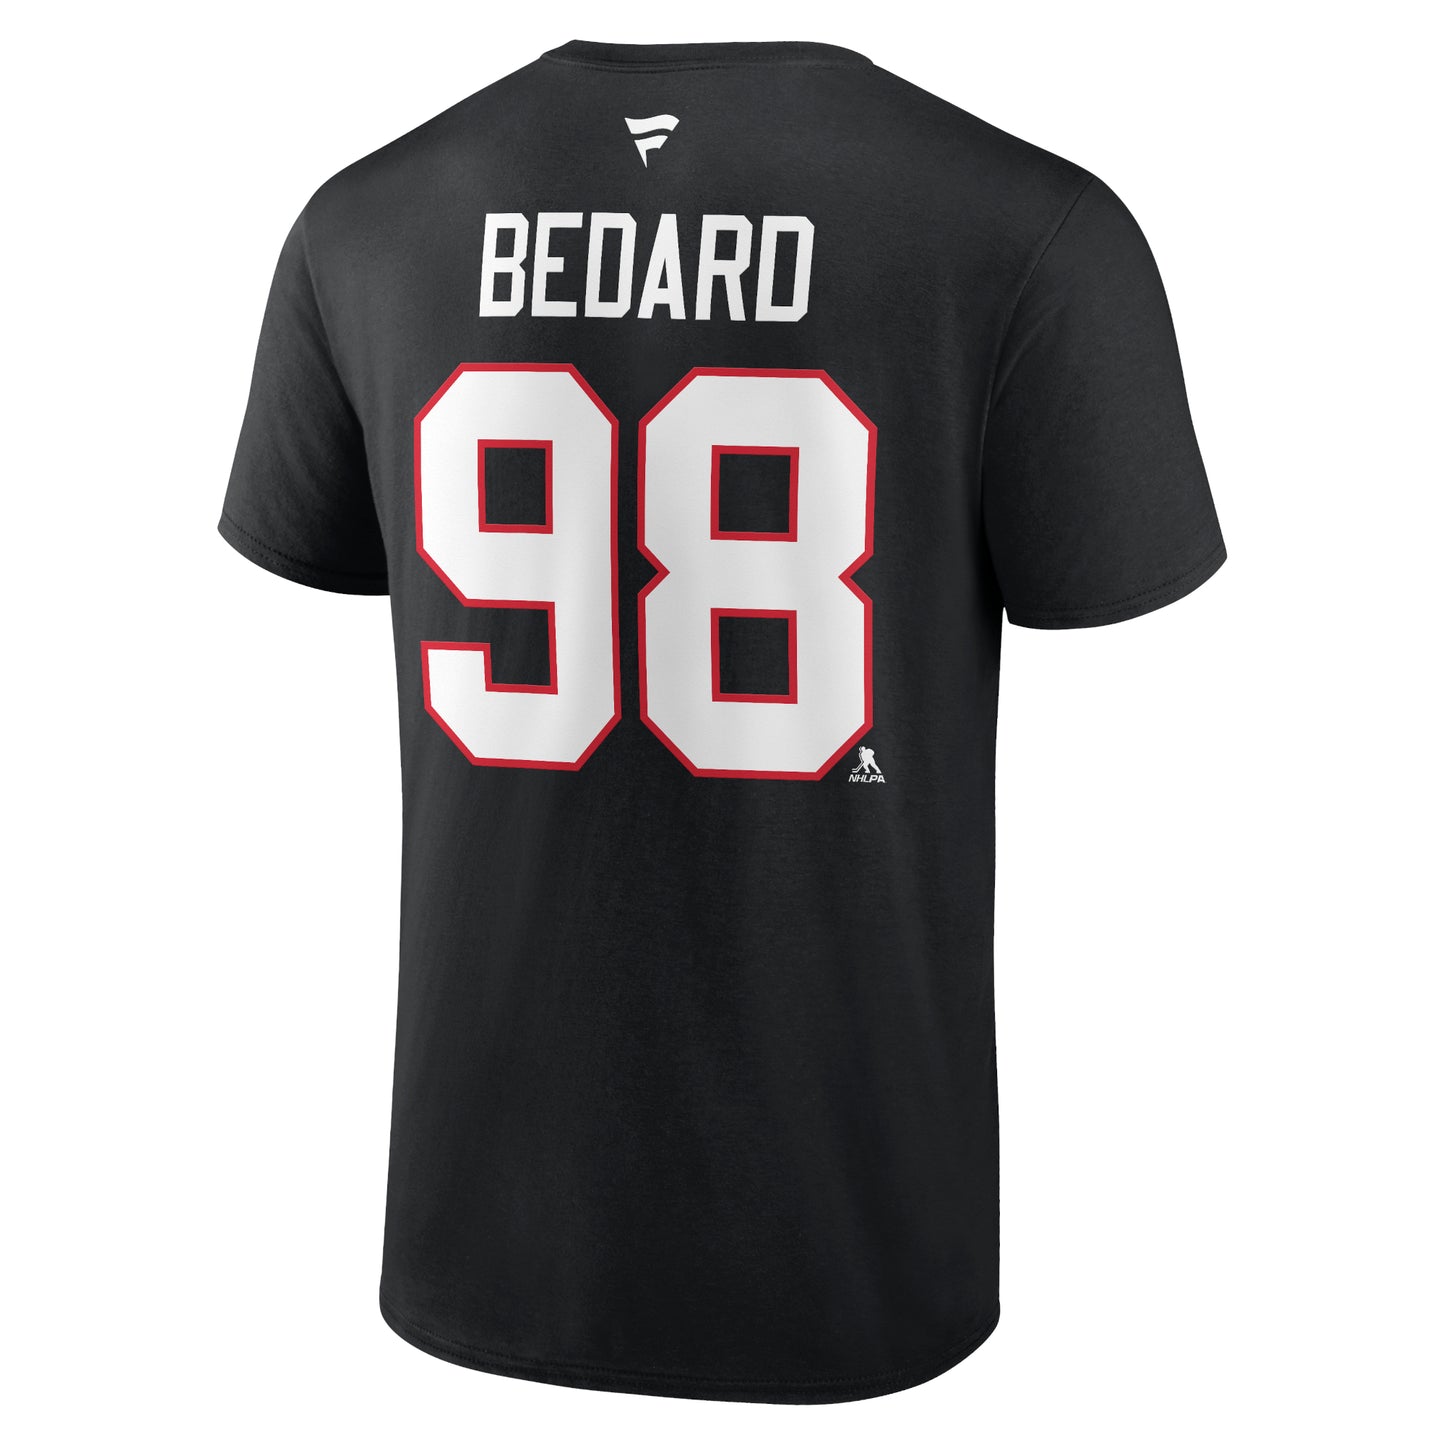 Connor Bedard #98 Chicago Blackhawks Black T-Shirt